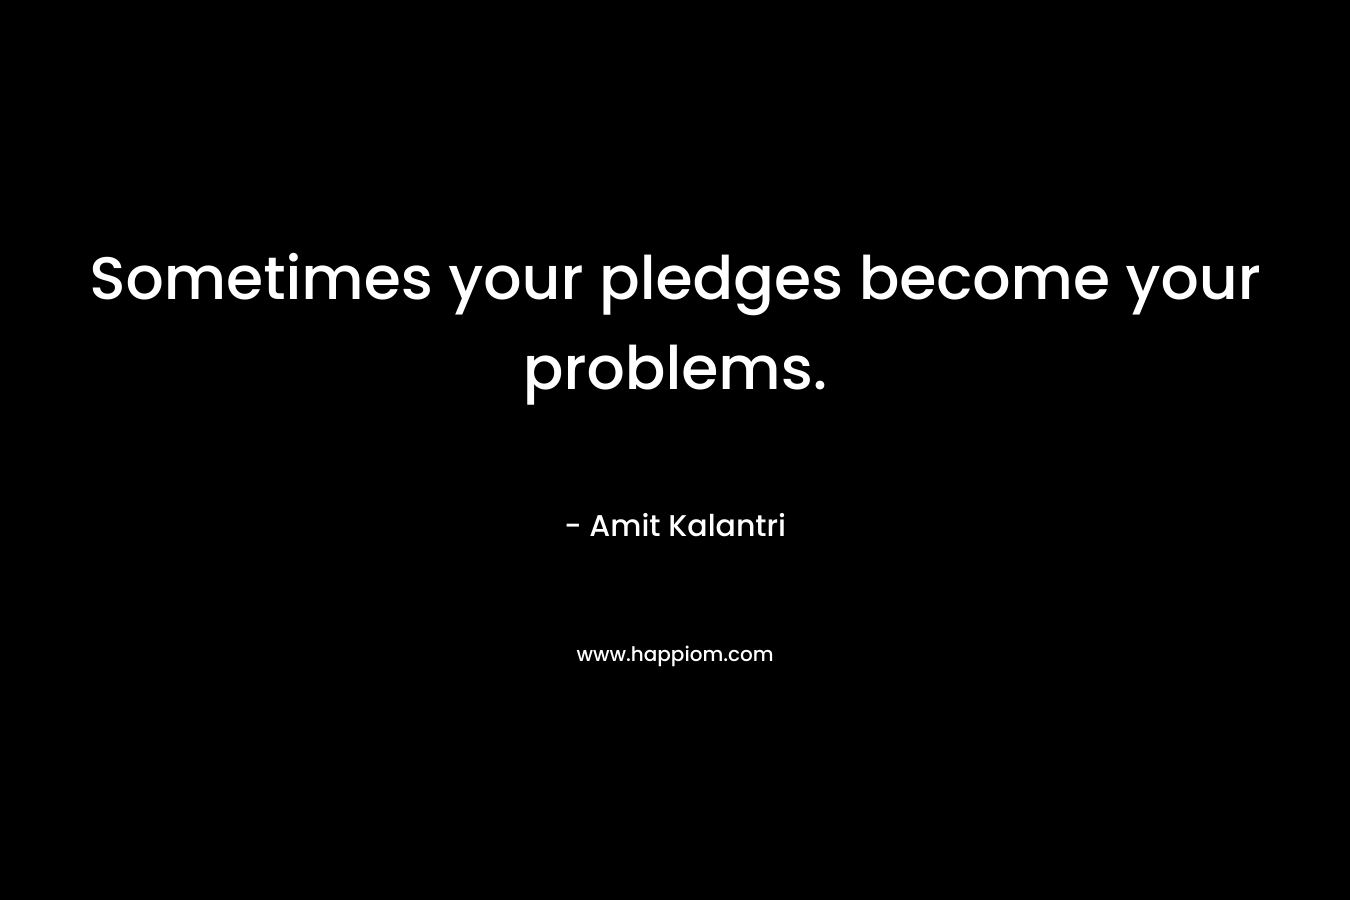 Sometimes your pledges become your problems. – Amit Kalantri